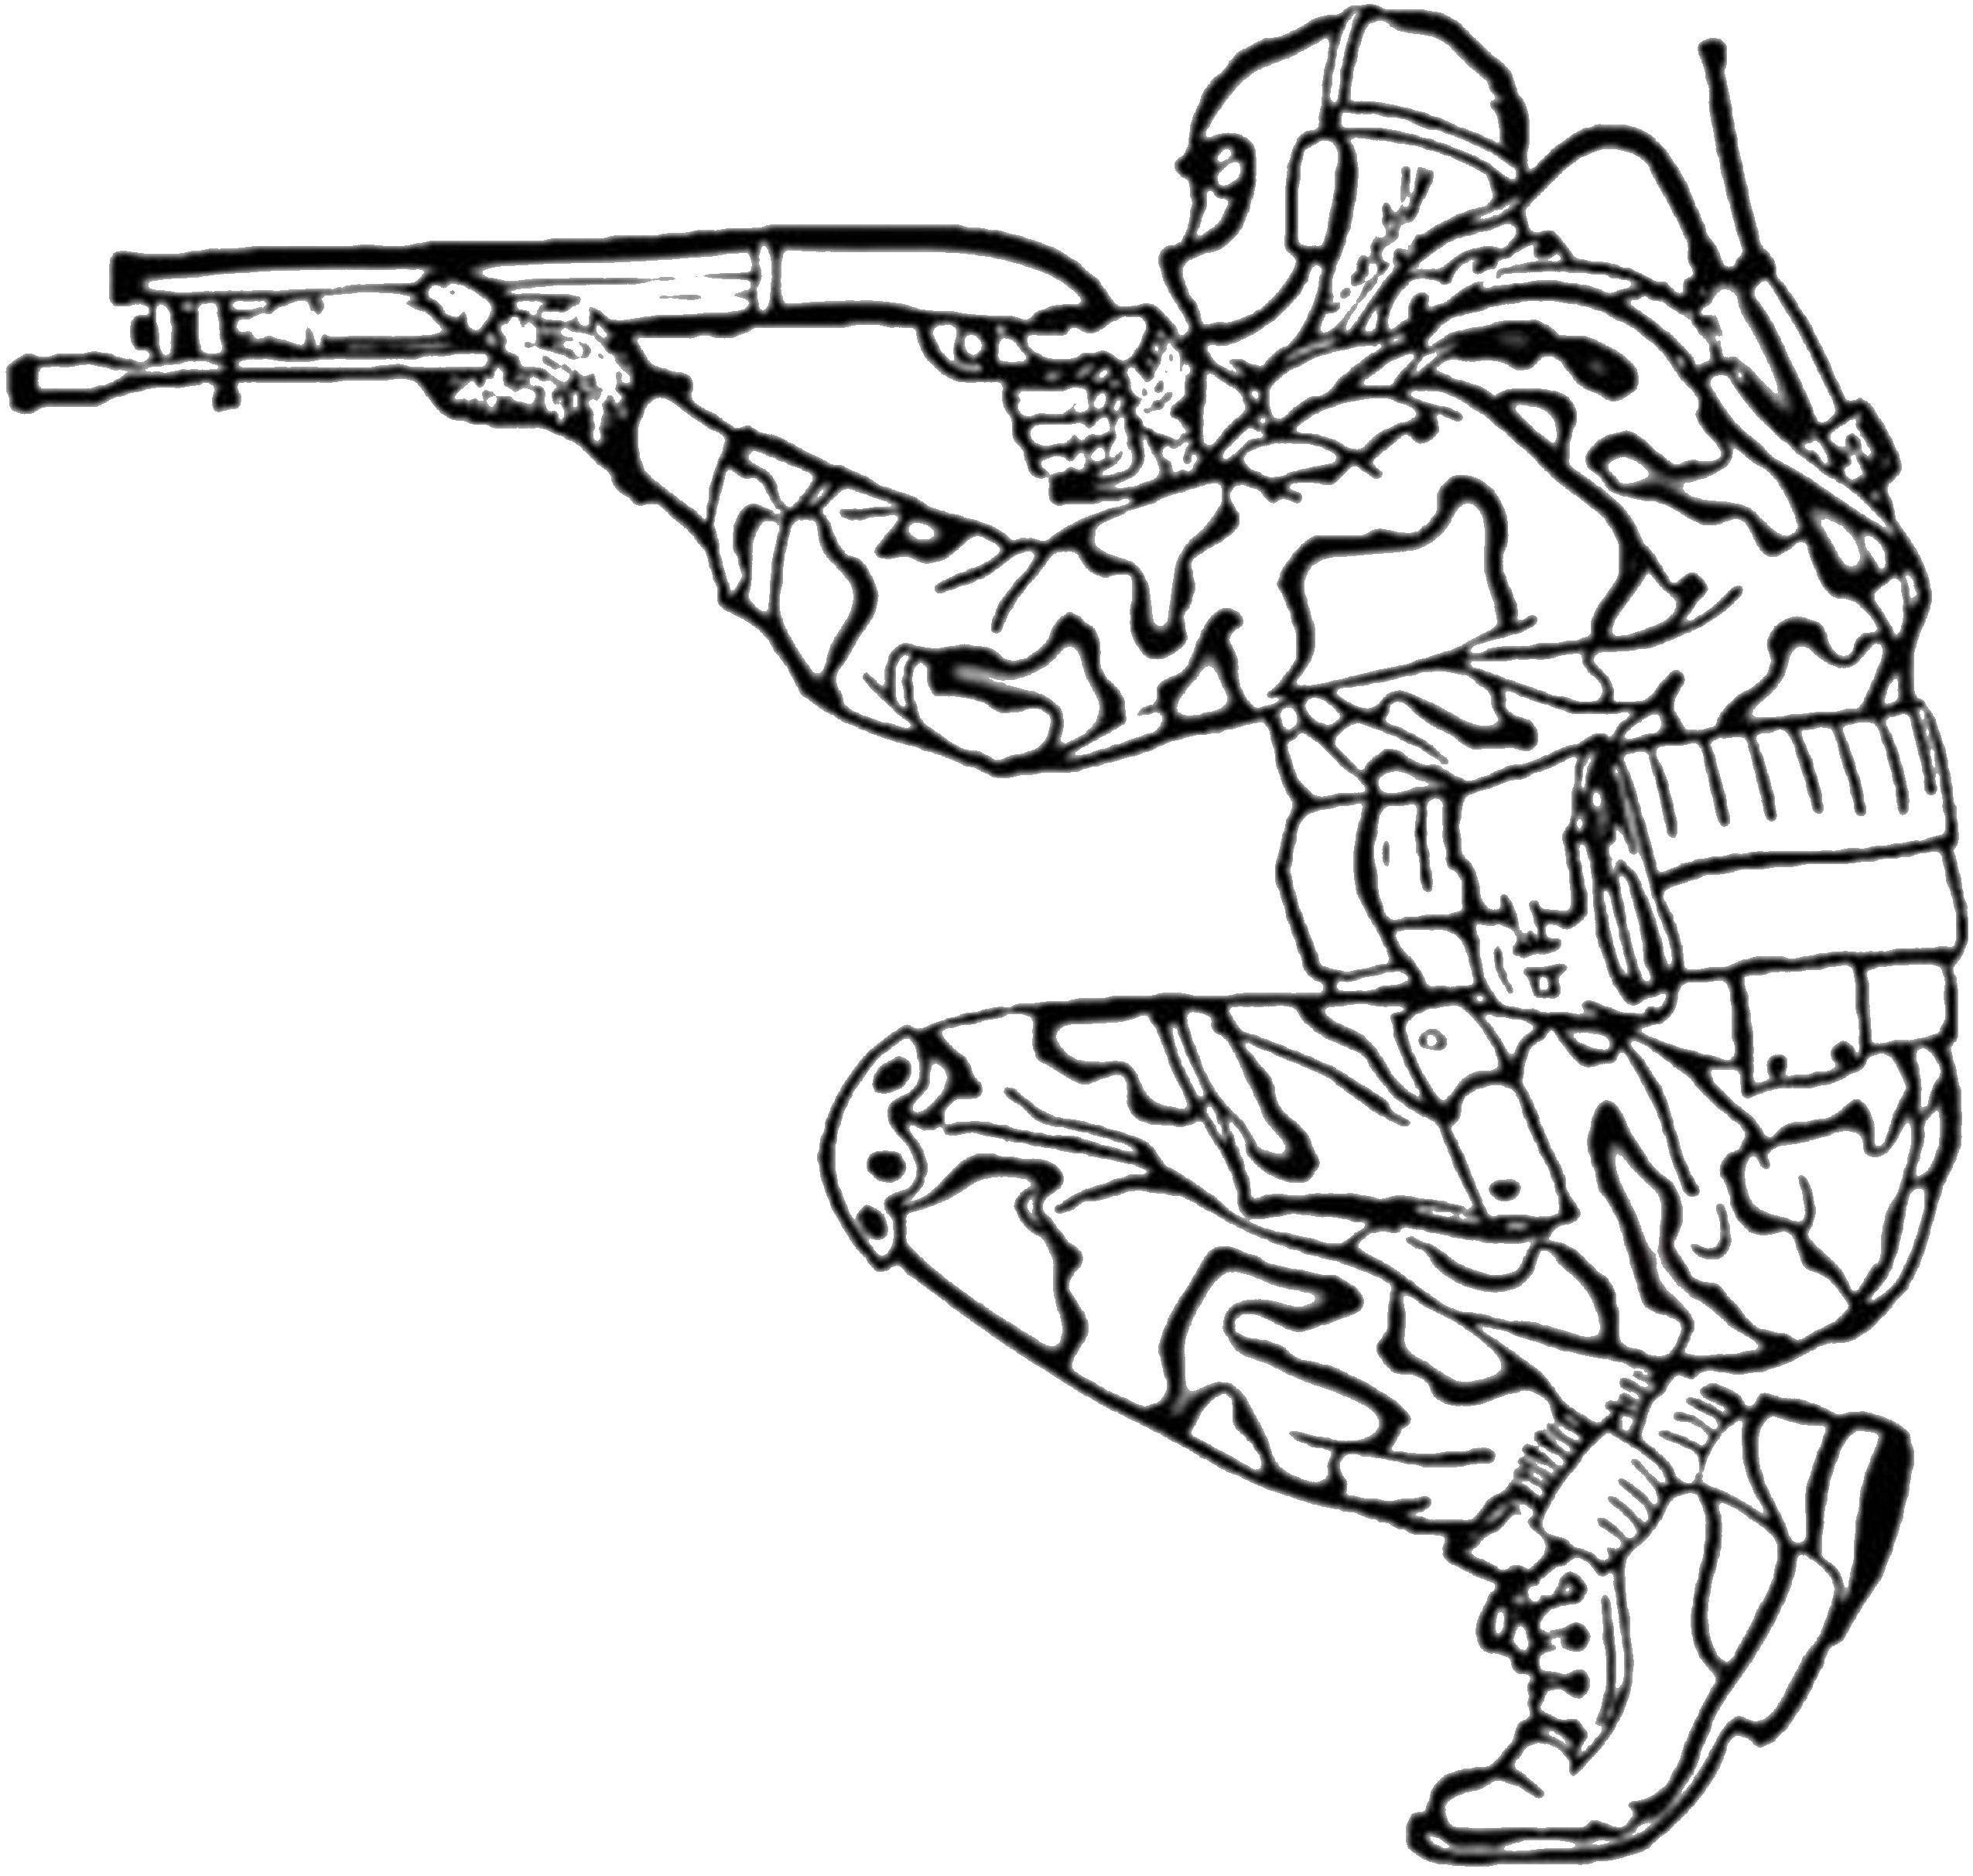 Опис: розмальовки  Солдат з рушницею. Категорія: військові розмальовки. Теги:  солдатів, рушниця.